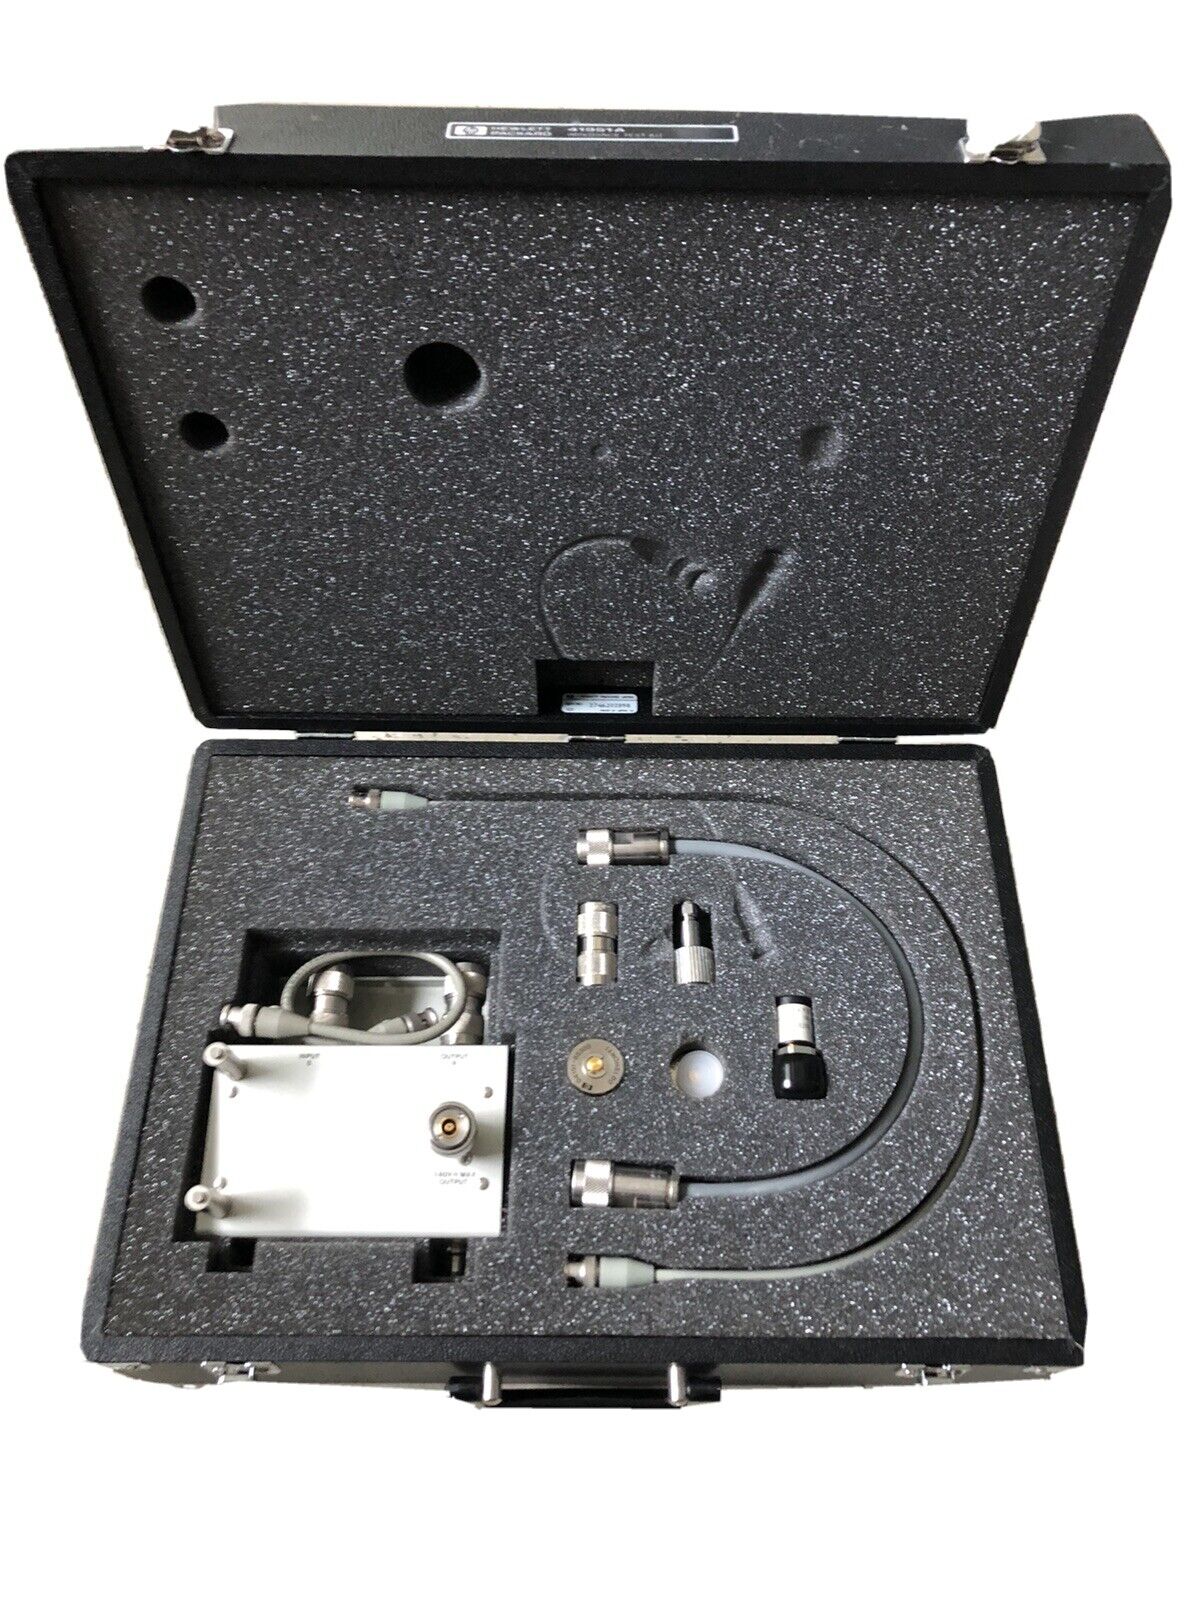 HP - Agilent - Keysight 41951A Impedance Test Kit. Perfect Condition.